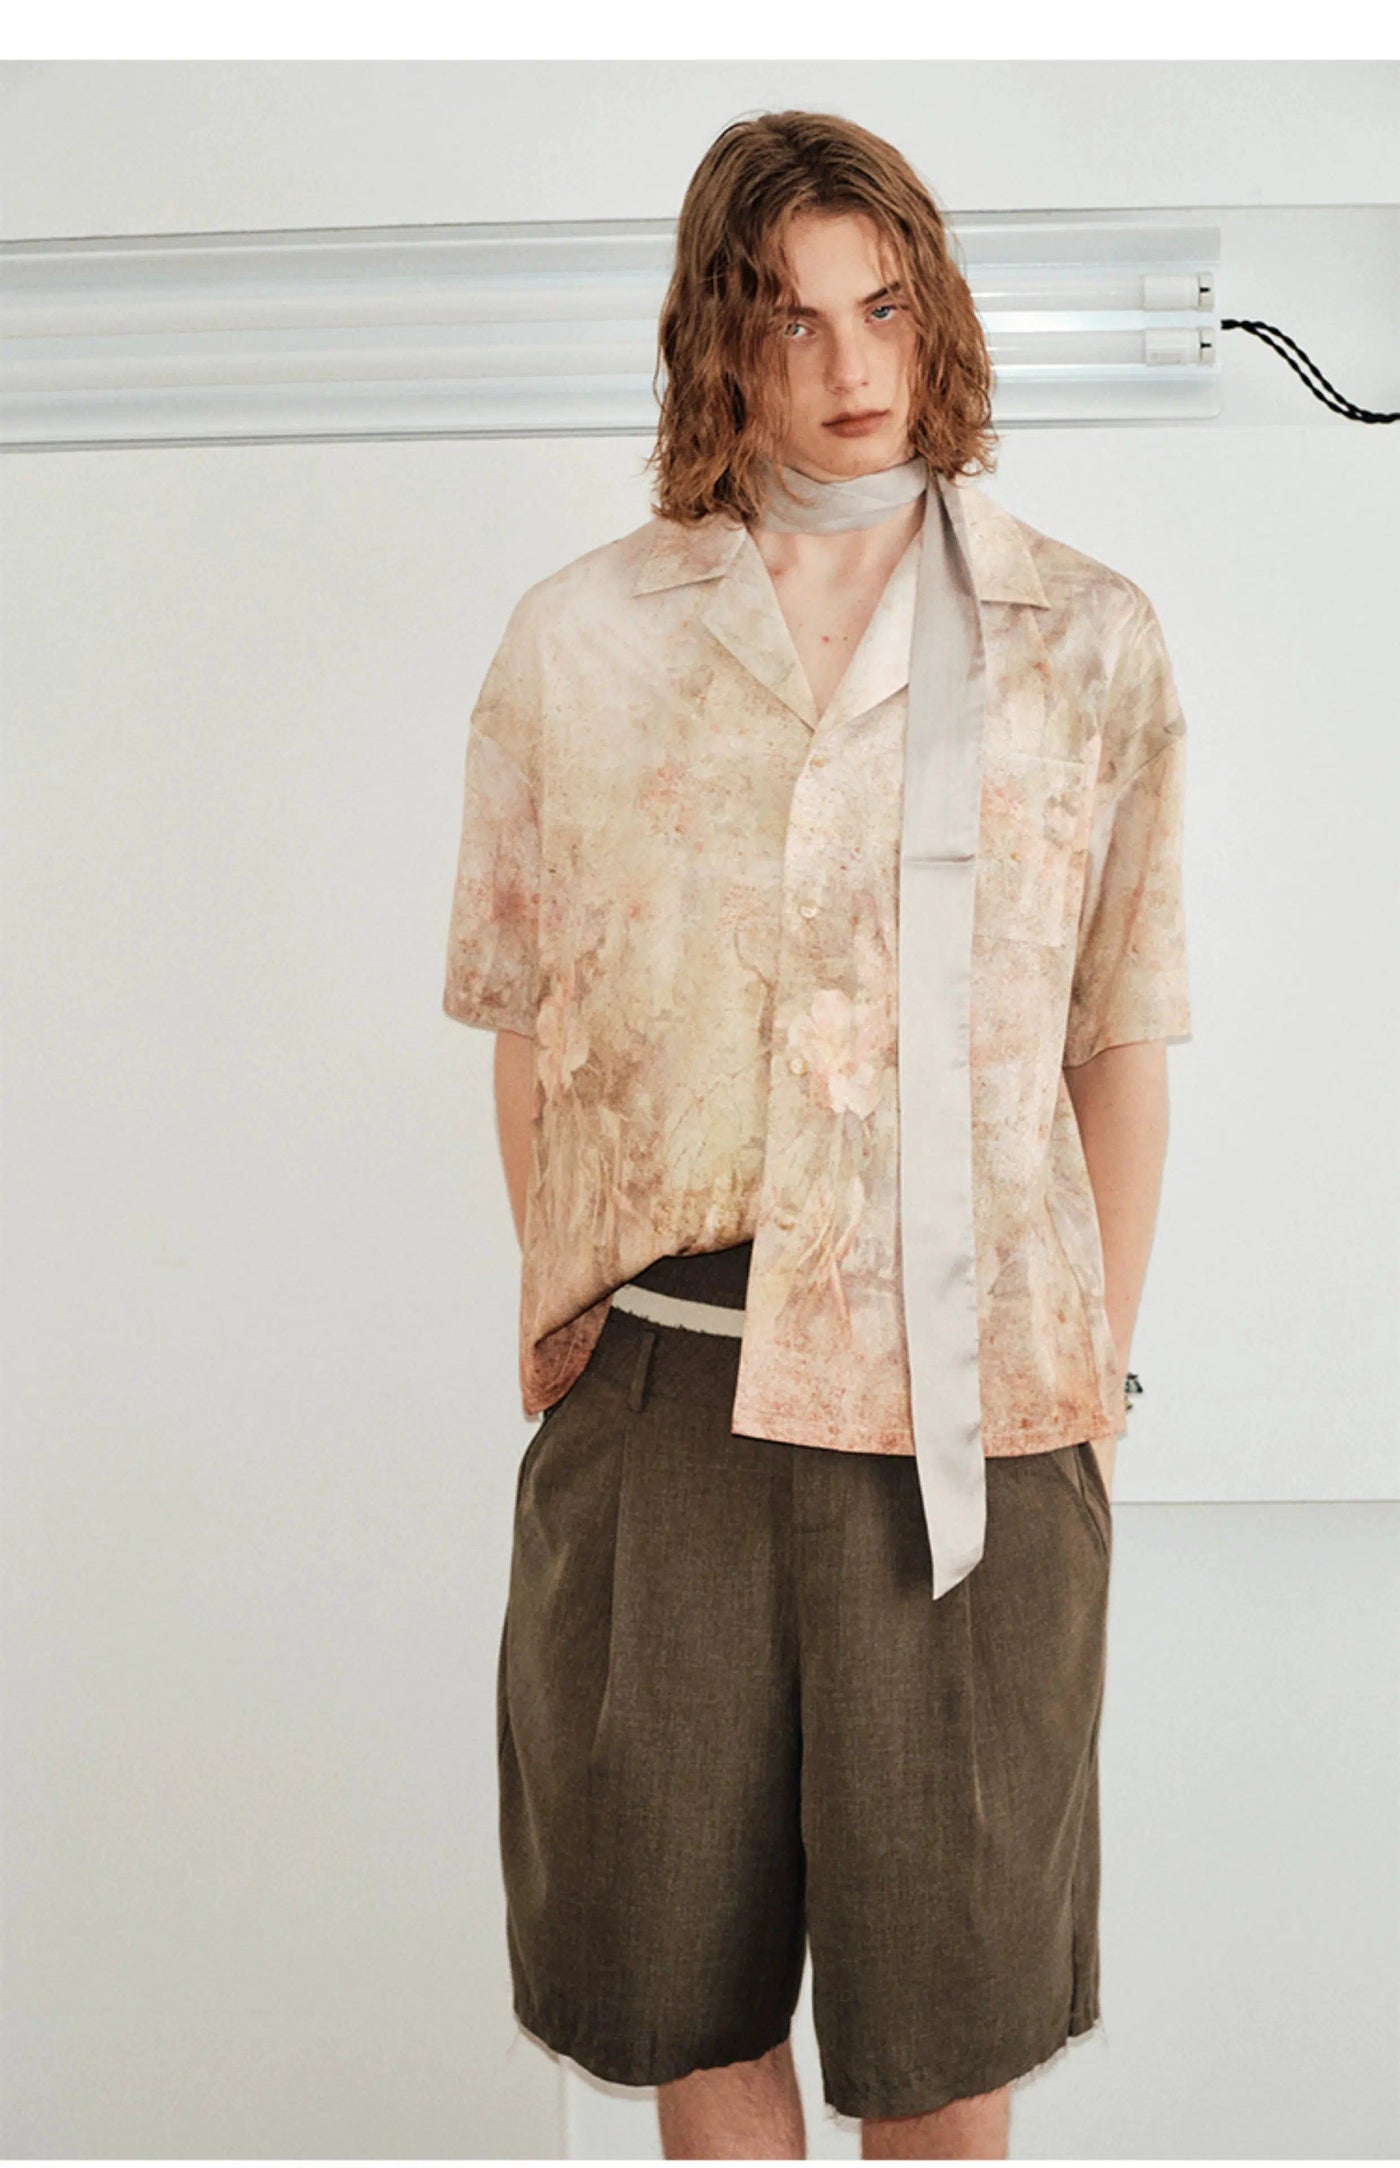 Rust Effect Buttoned Shirt Korean Street Fashion Shirt By Kreate Shop Online at OH Vault